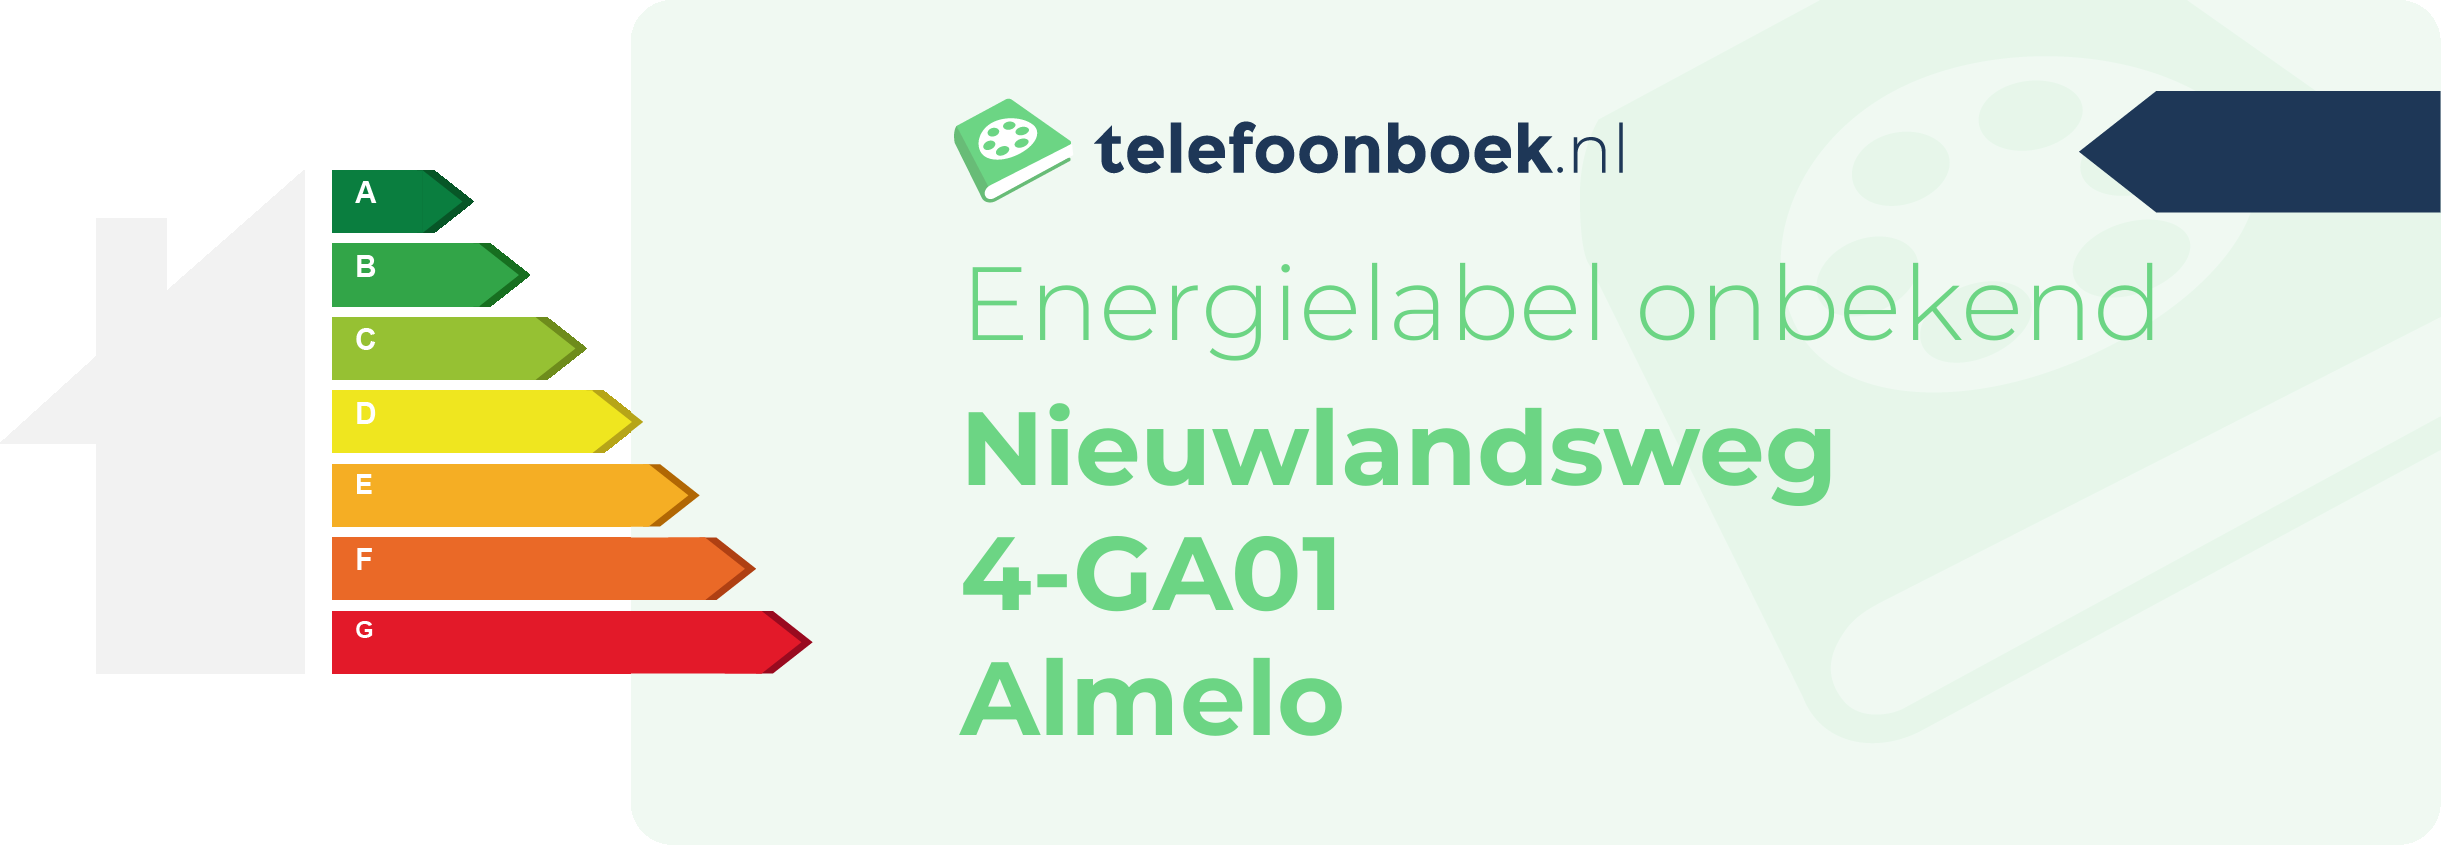 Energielabel Nieuwlandsweg 4-GA01 Almelo